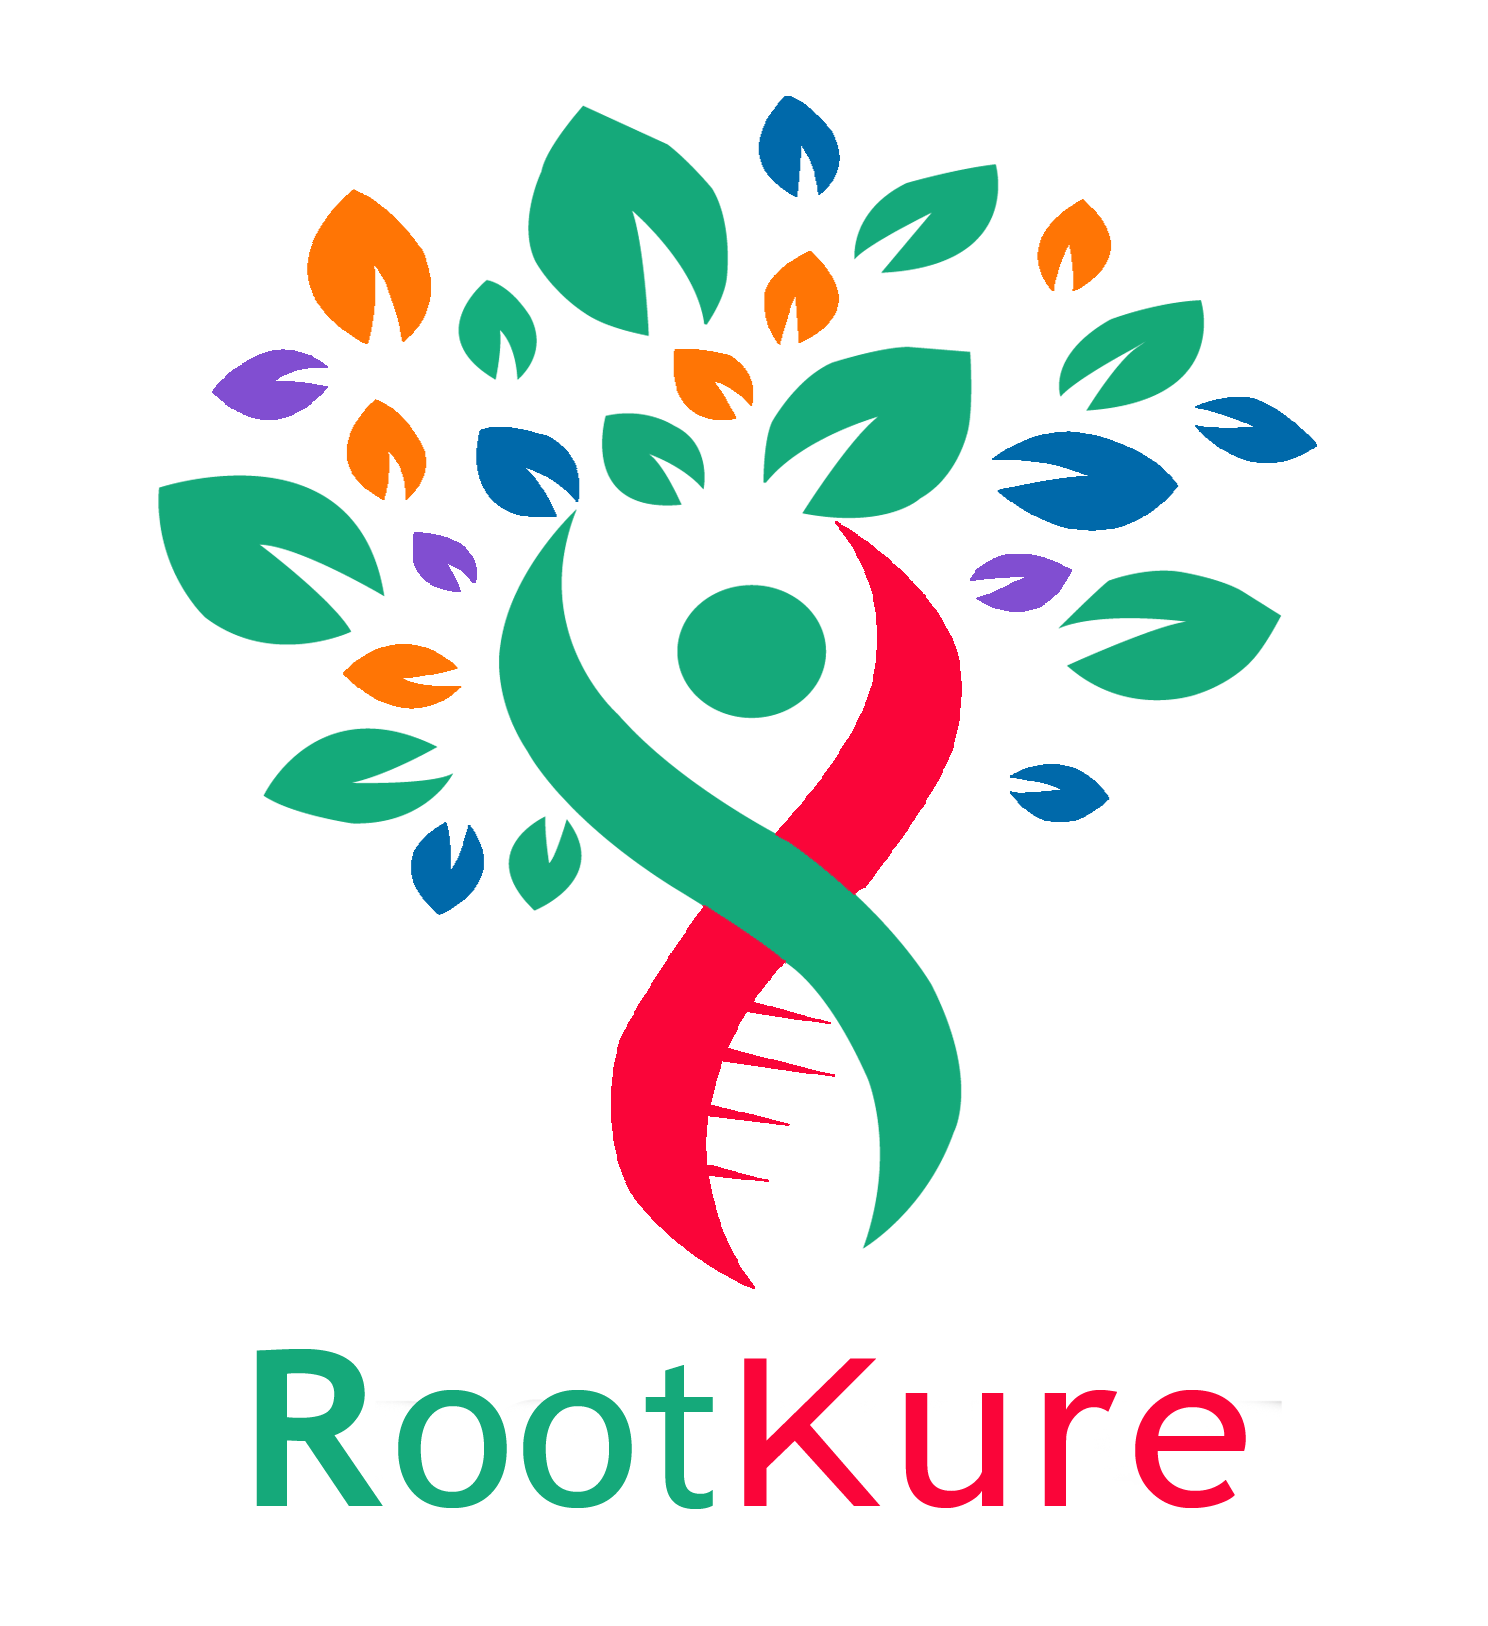 Rootkure Wellness Solutions